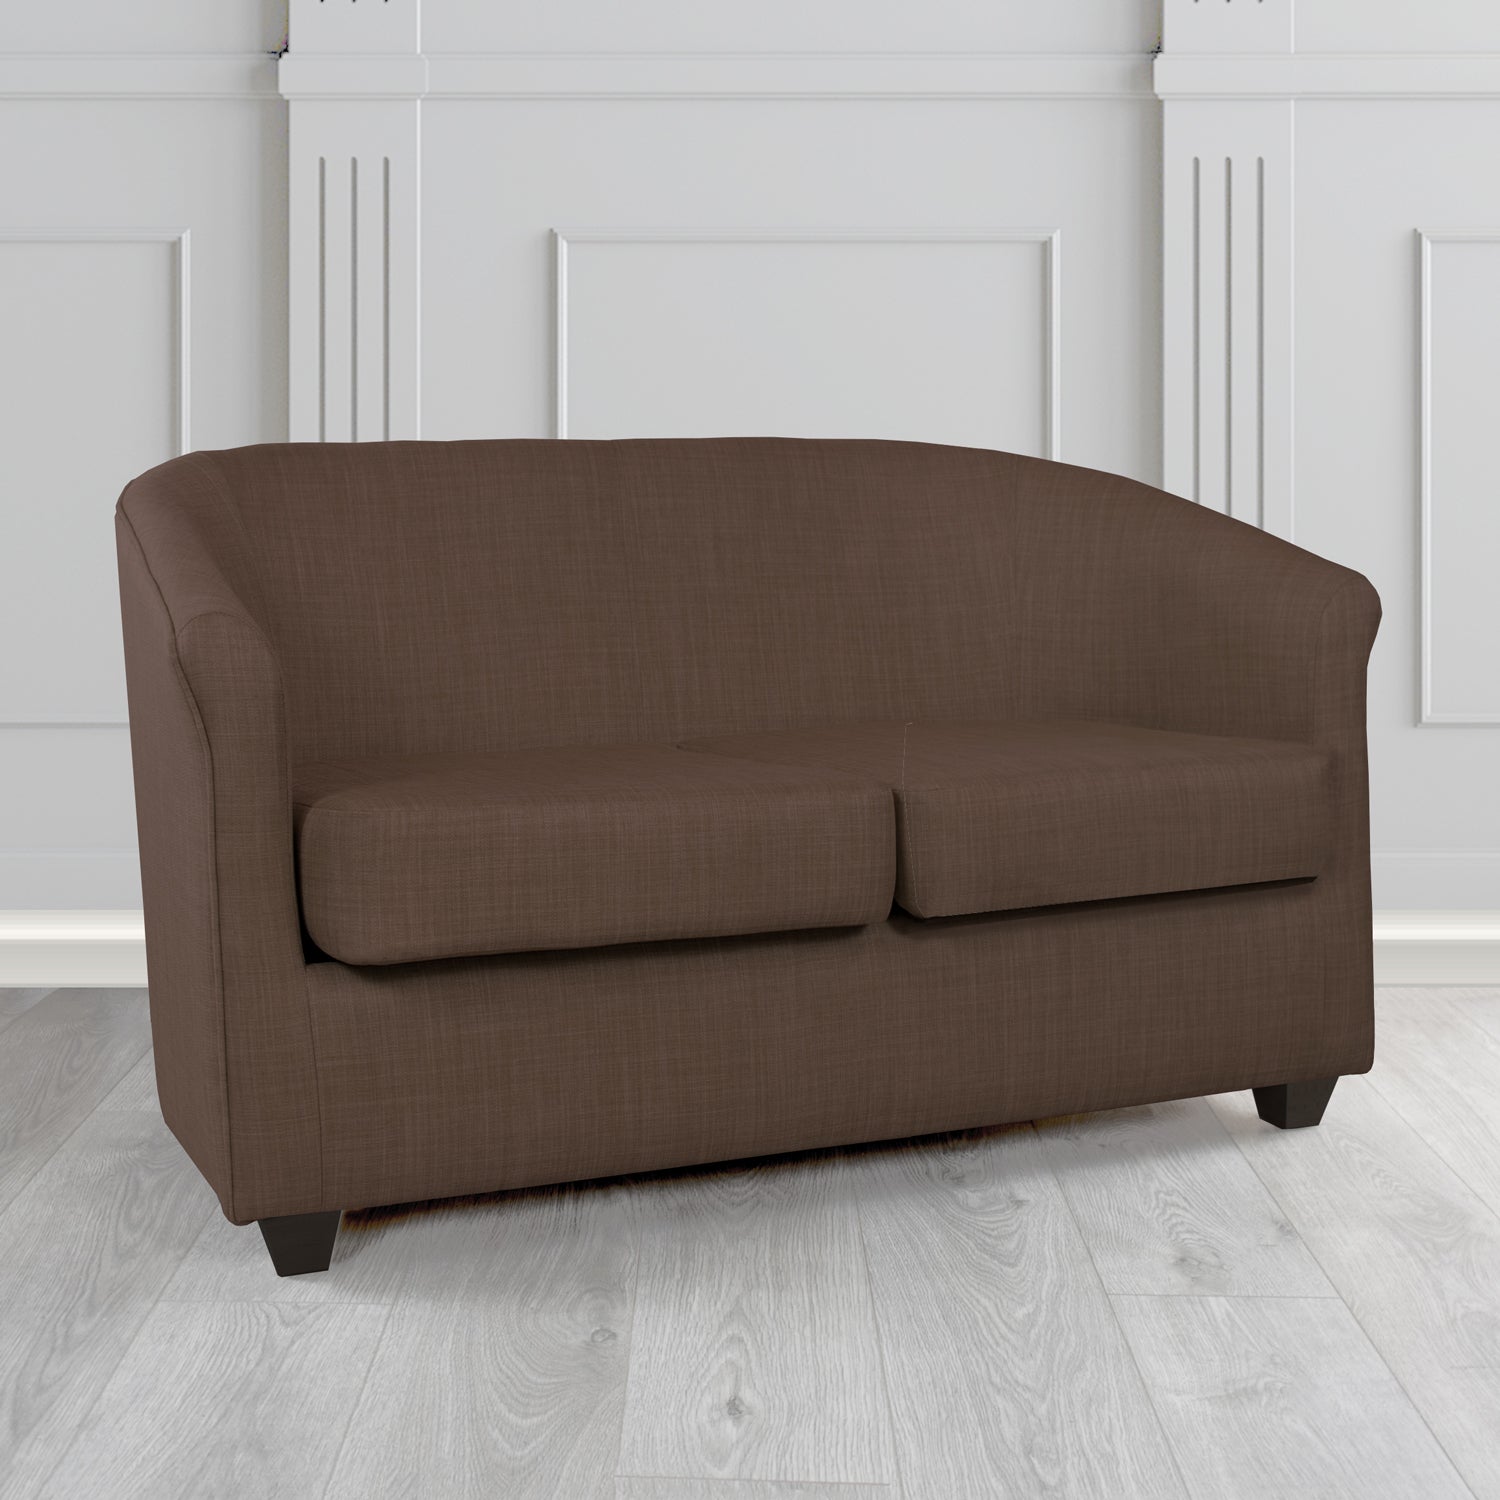 Cannes Charles Sandalwood Linen Fabric 2 Seater Tub Sofa - The Tub Chair Shop